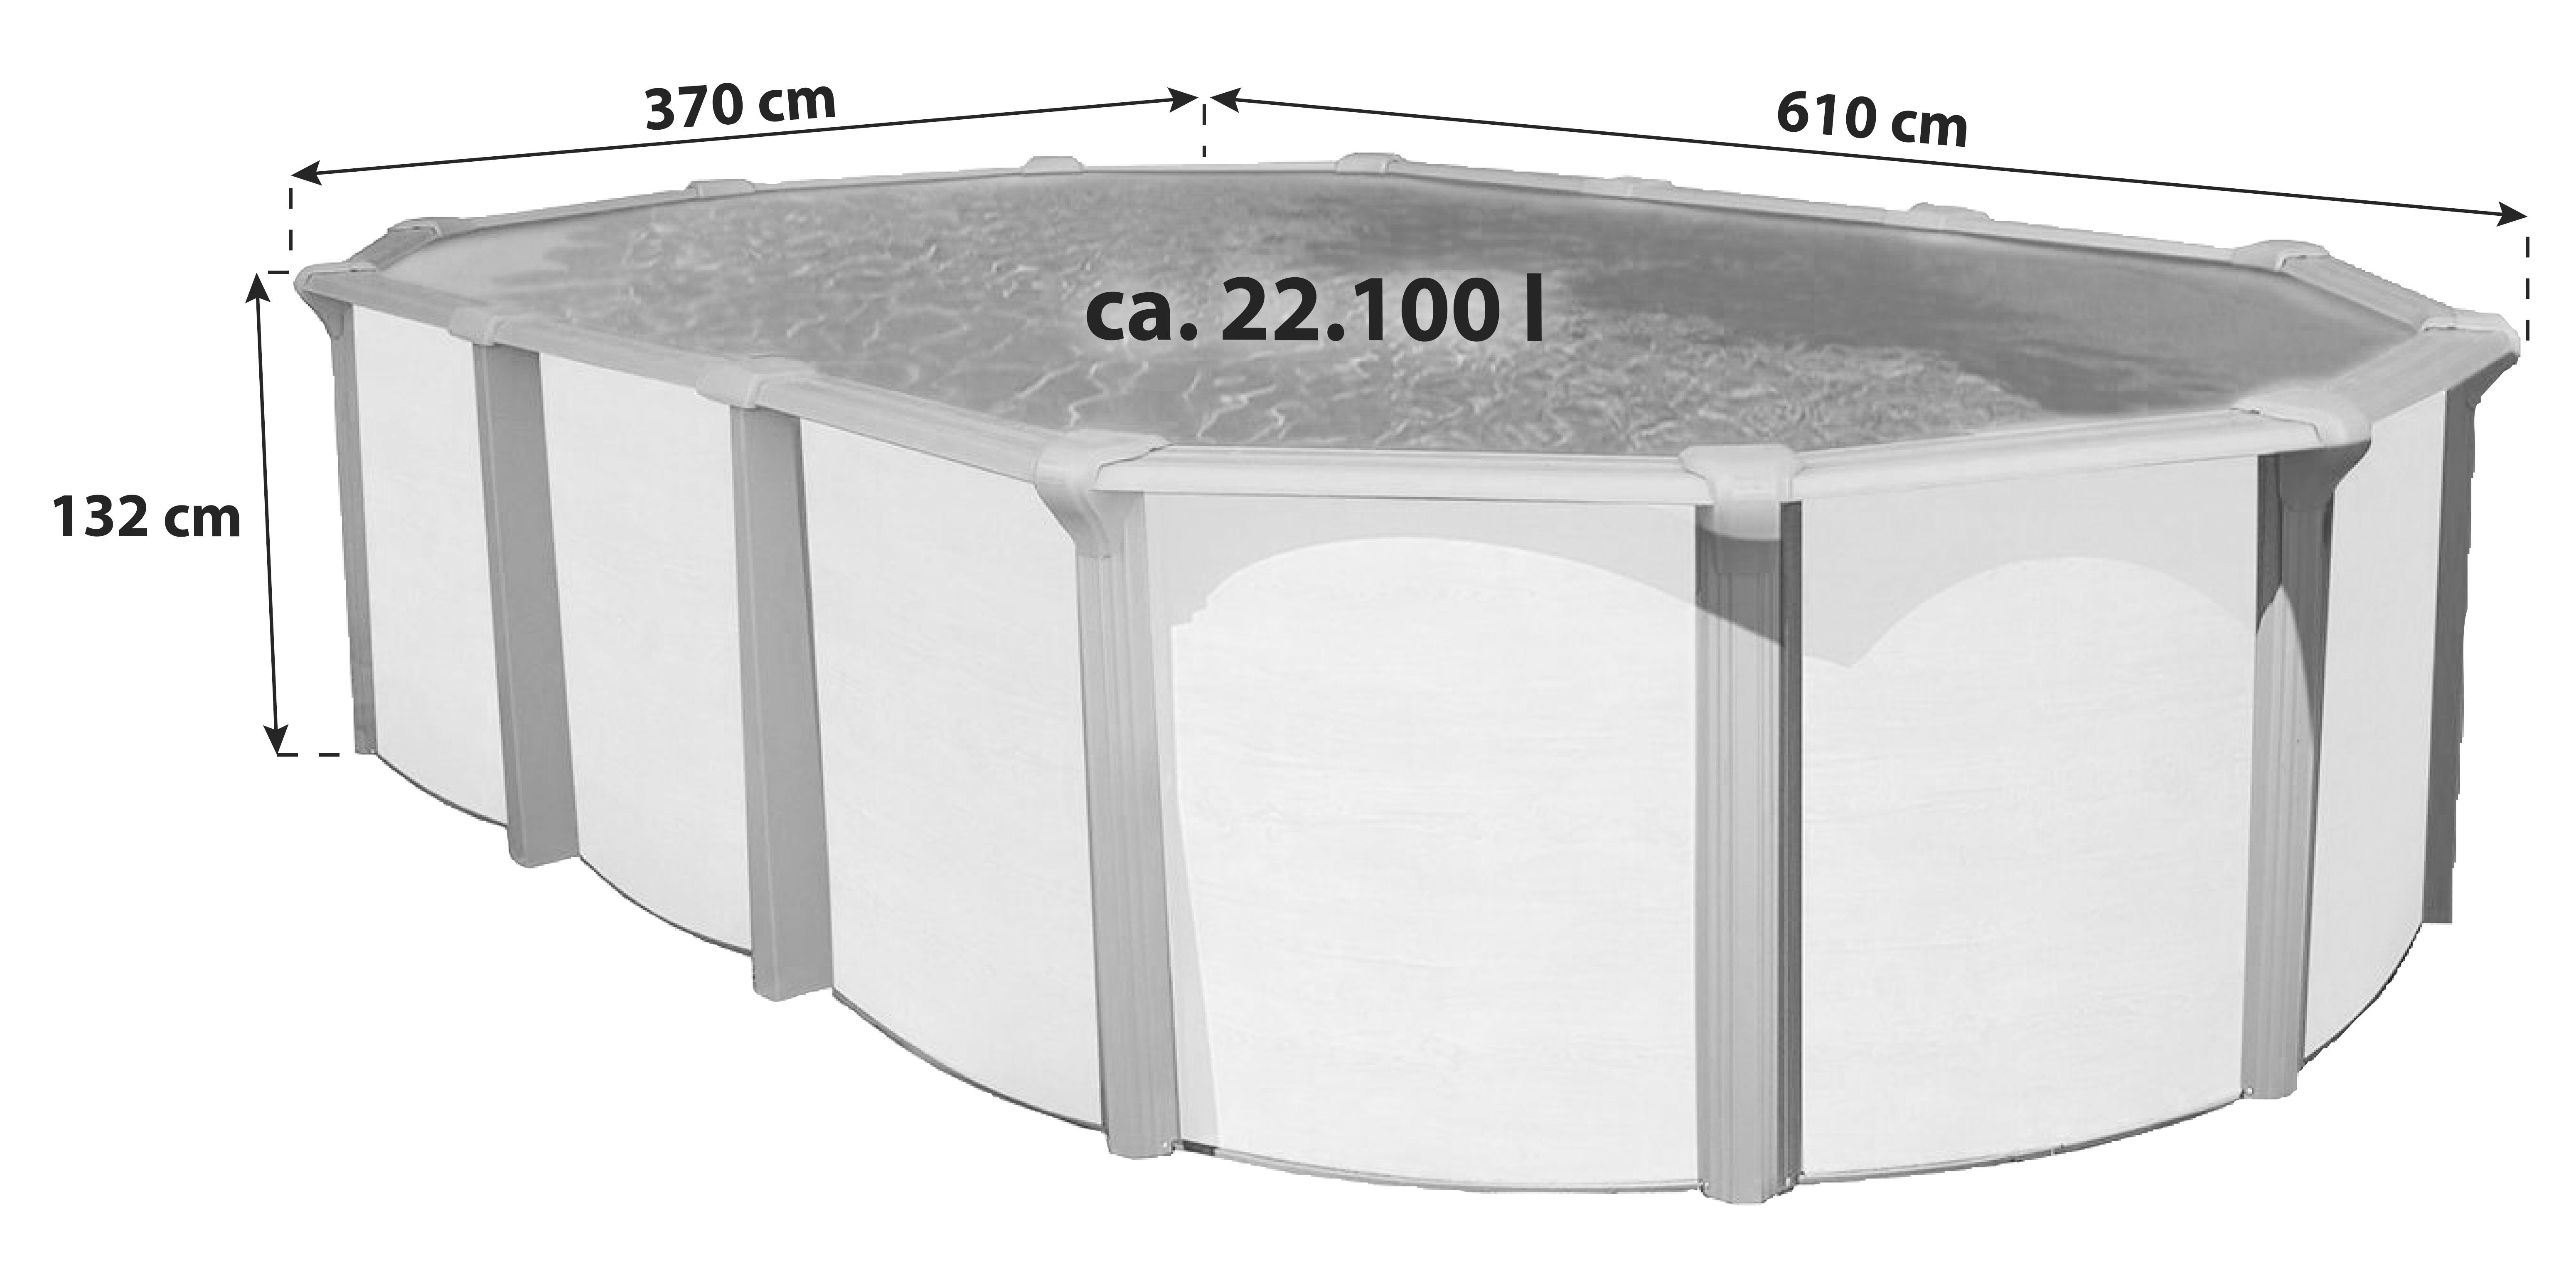 Stahlwandpool Oval Steely De Luxe Supreme + Pumpe L: 610 cm - Braun/Weiß, Basics, Kunststoff (610/370/132cm)